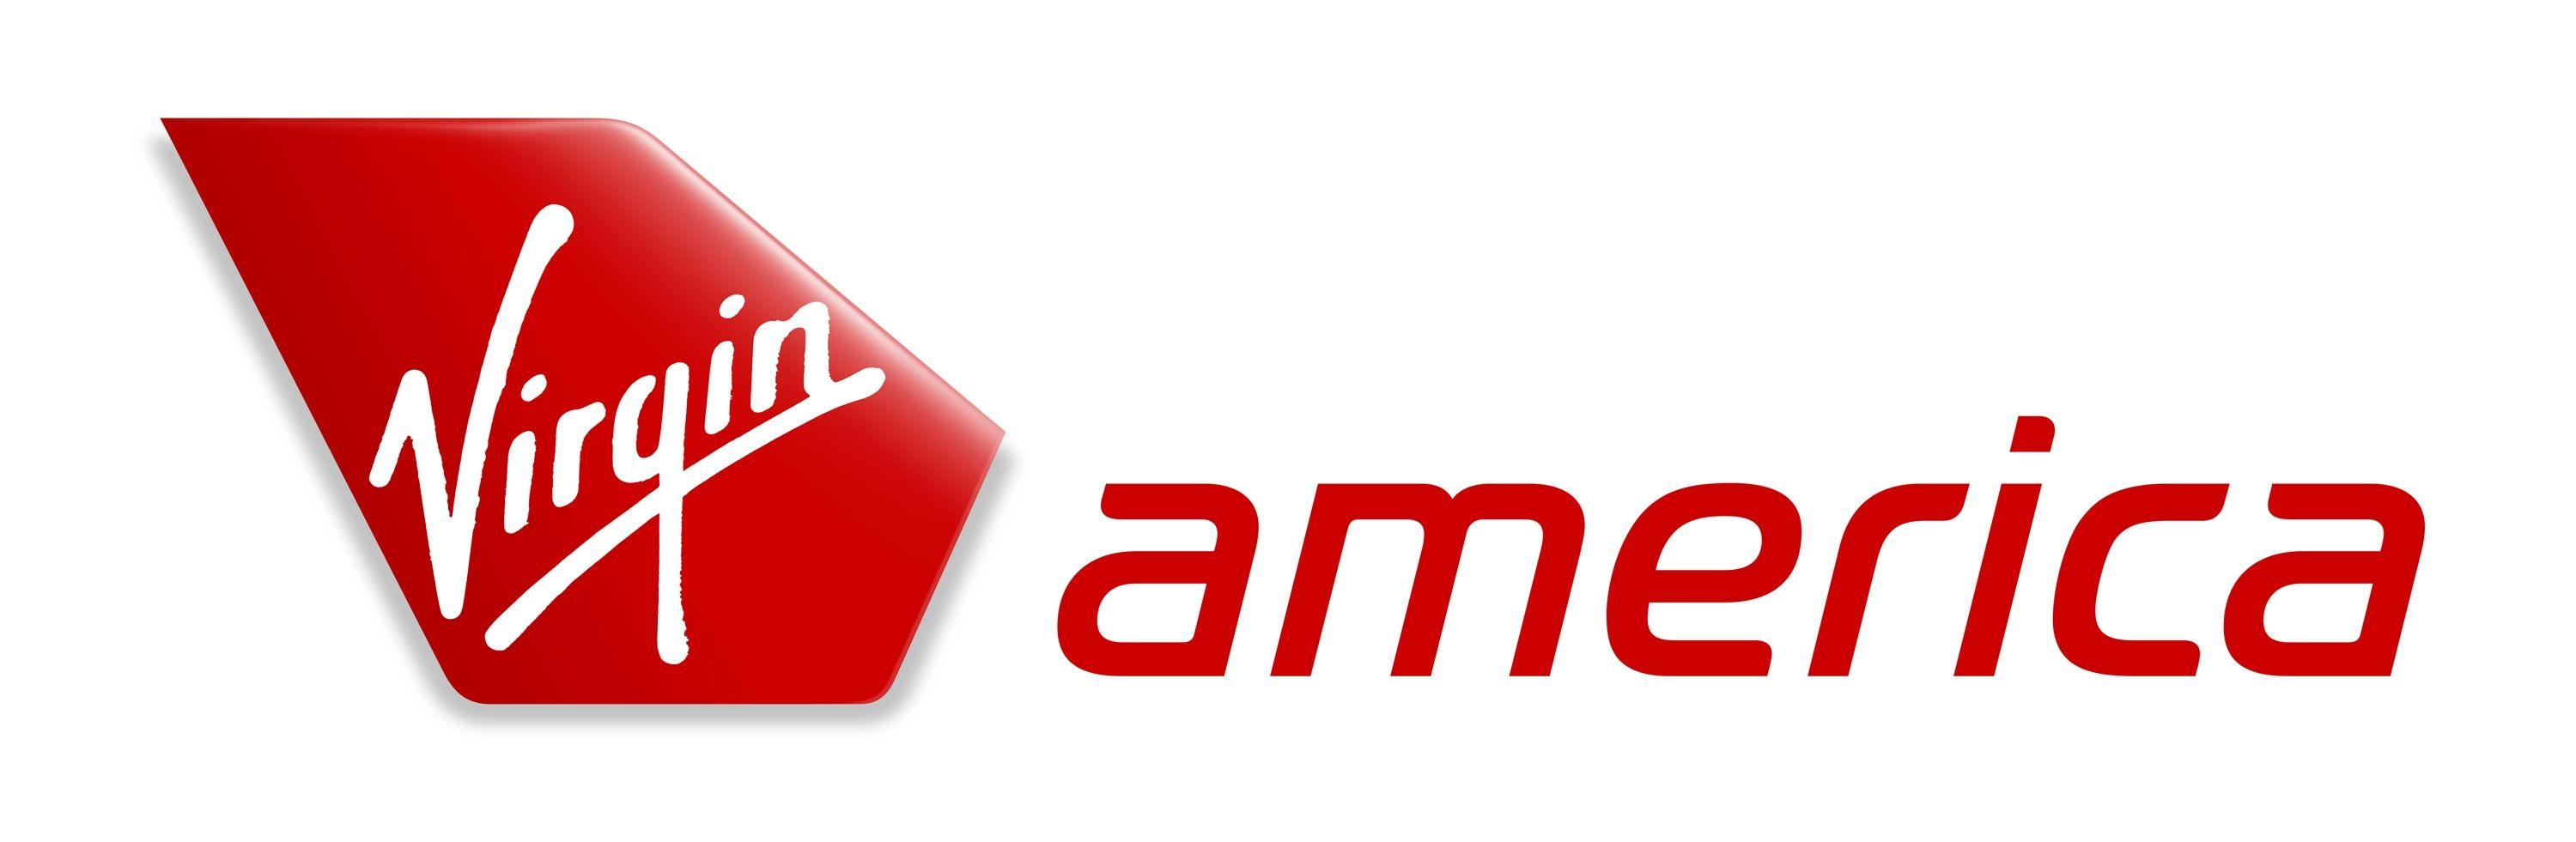 America Airlines Logo - Virgin america airlines Logos